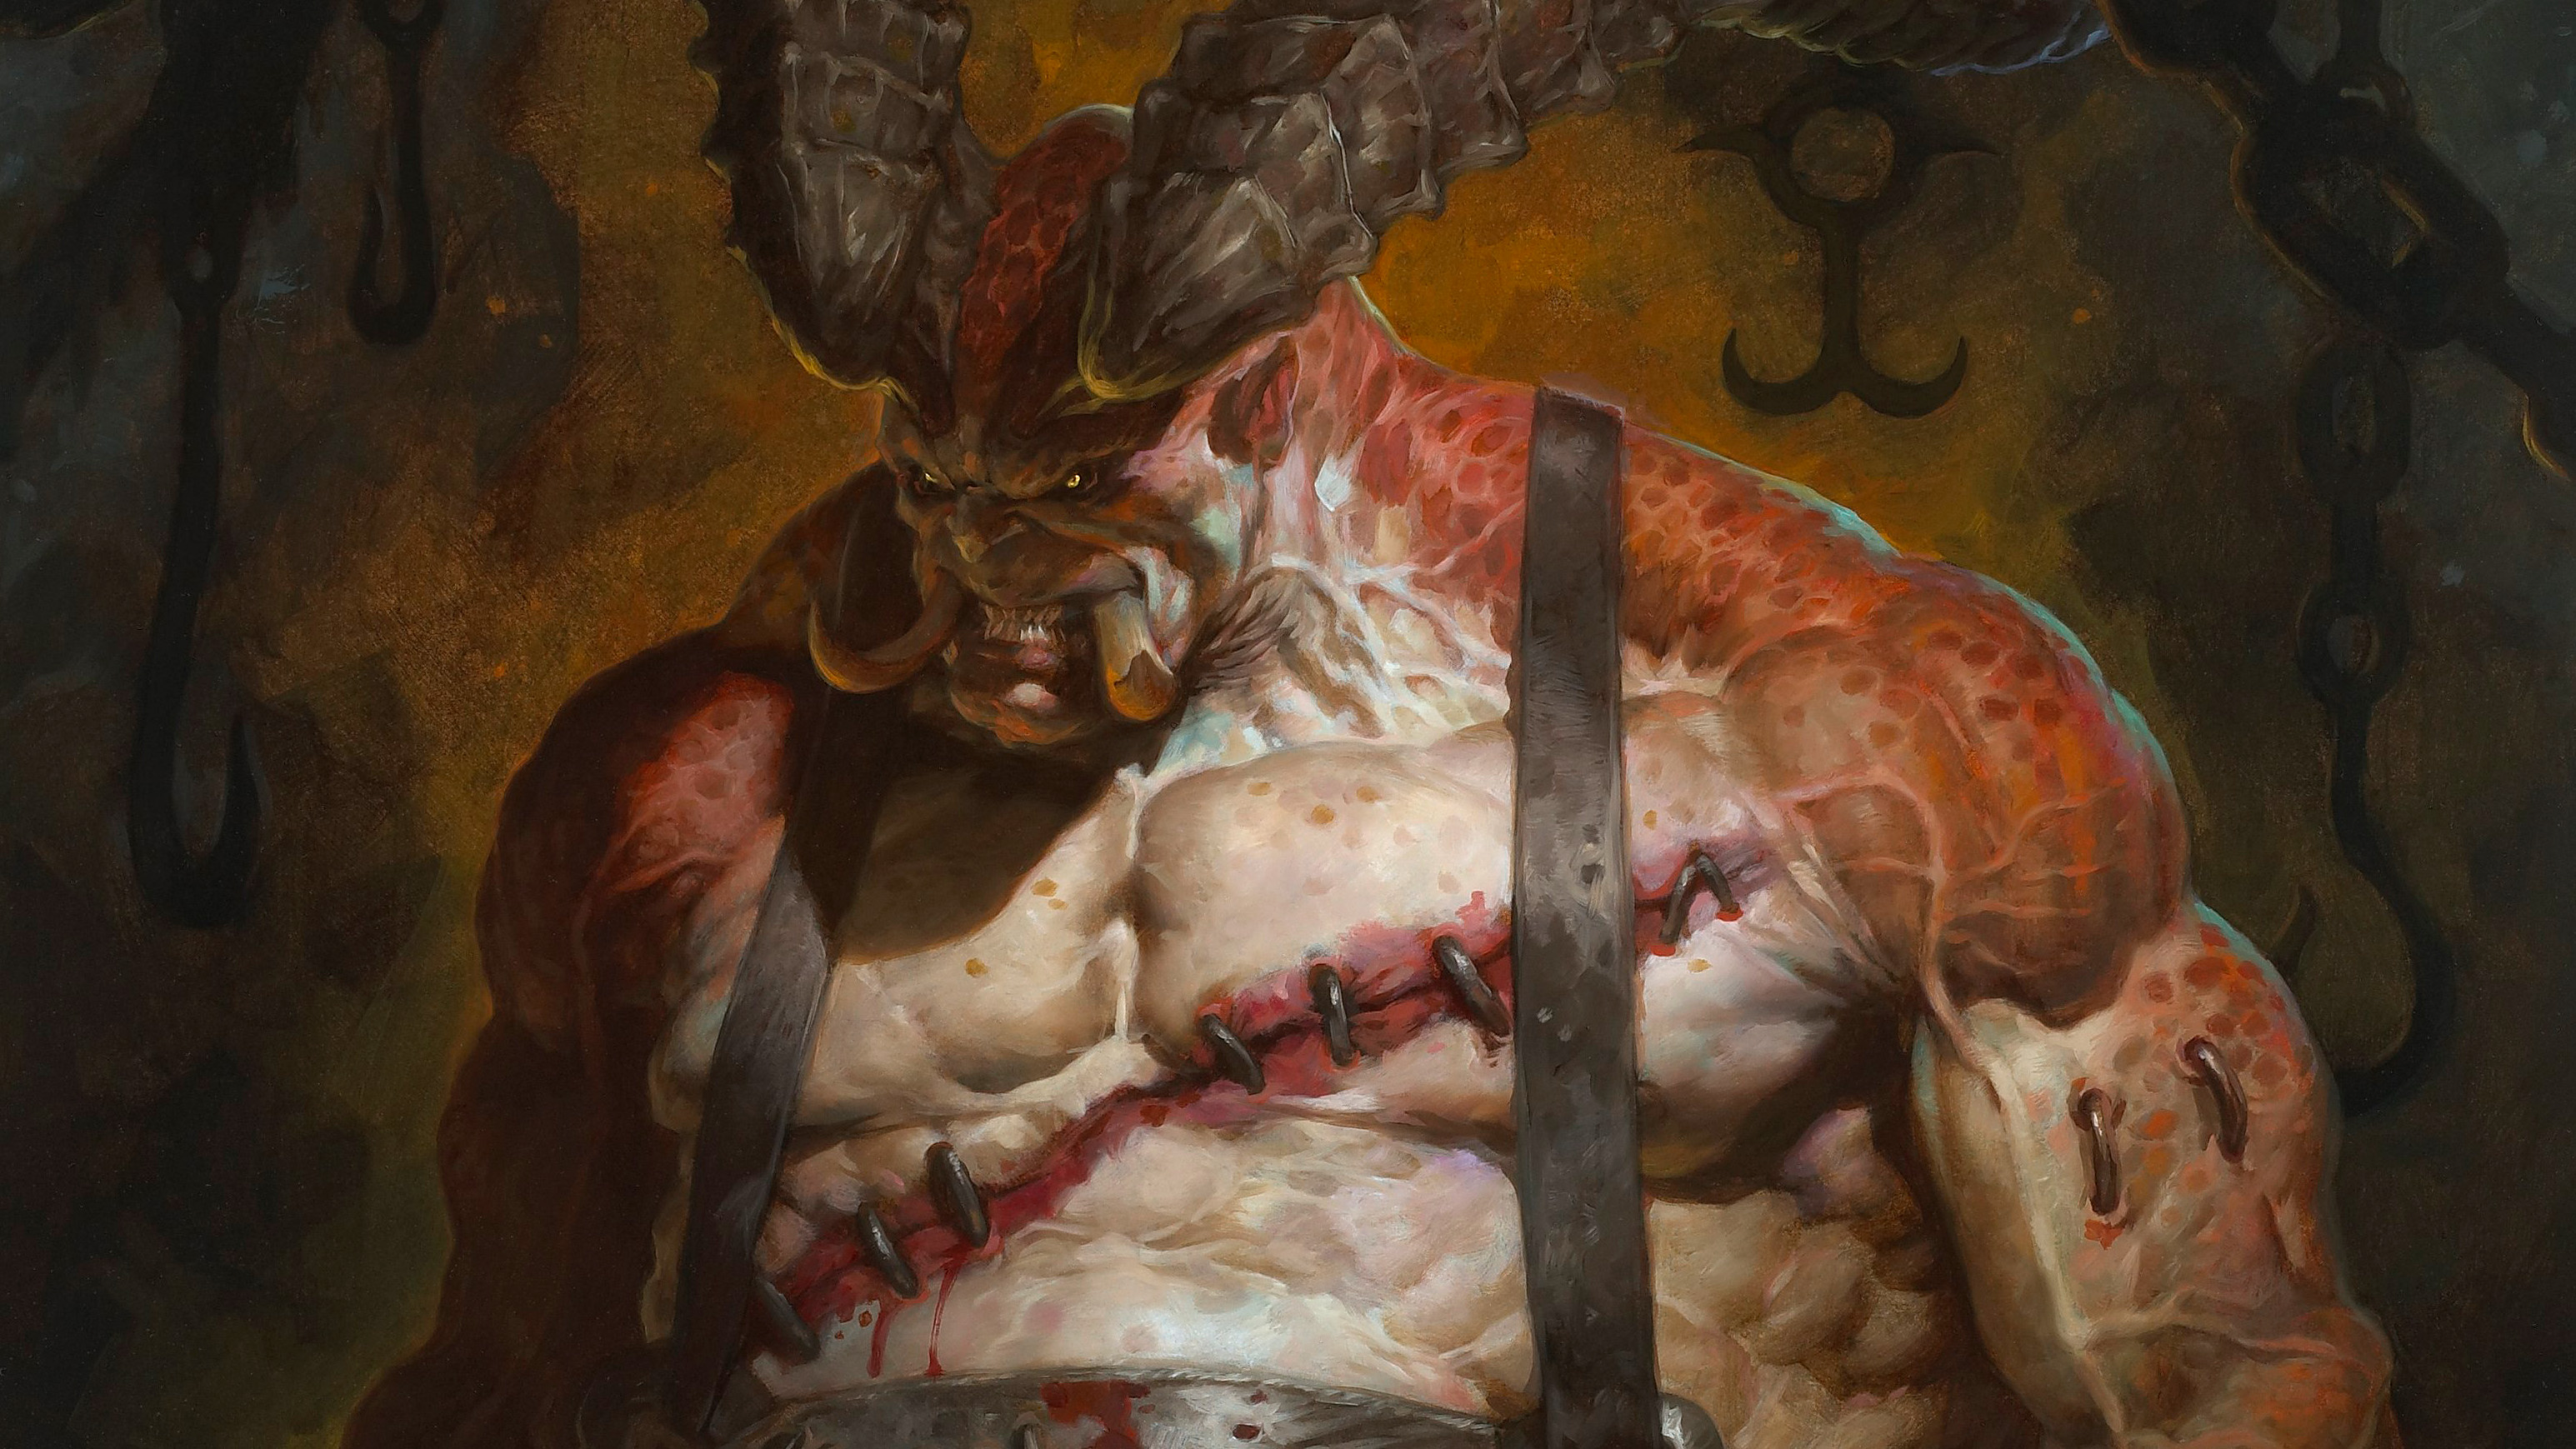 Diablo 4 - The Butcher